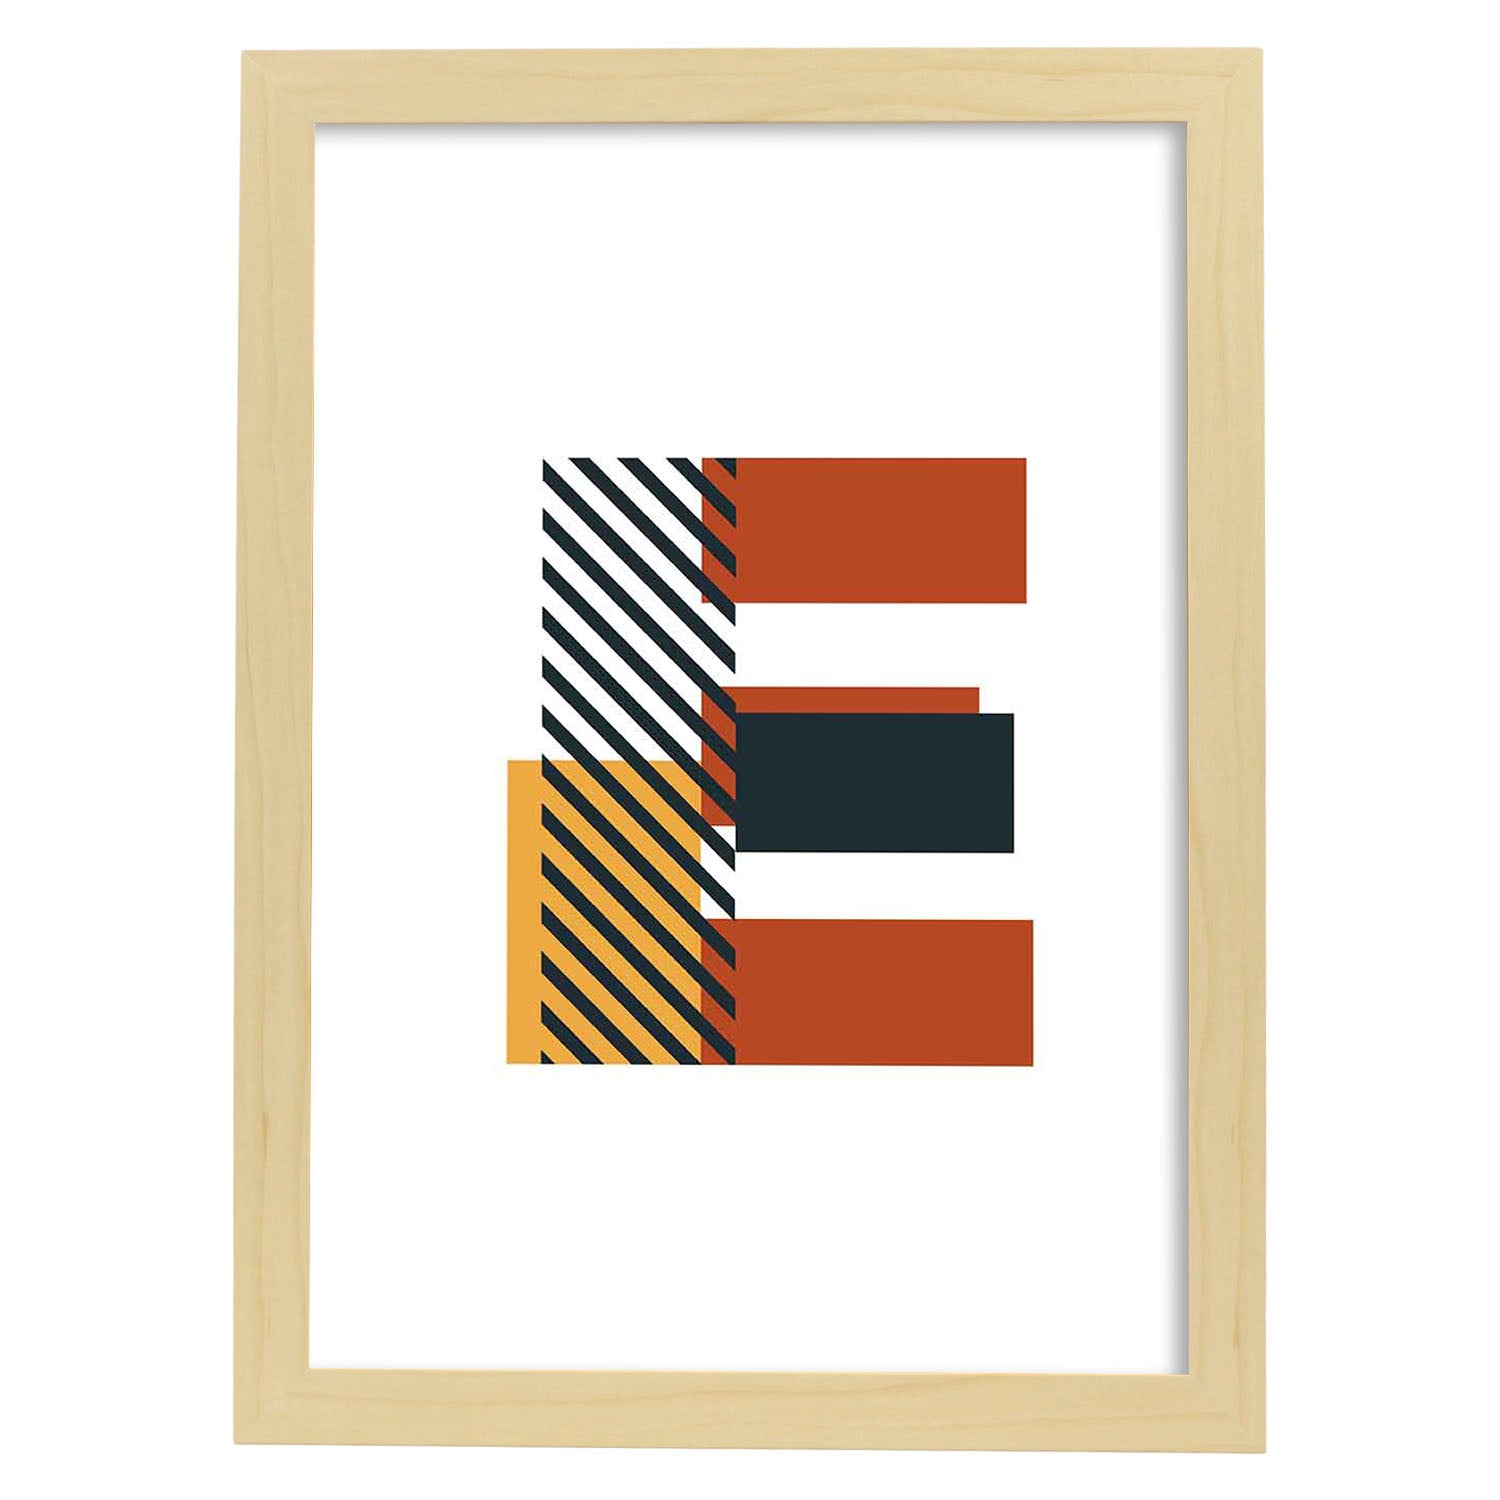 Poster de letra E. Lámina estilo Geometria con imágenes del alfabeto.-Artwork-Nacnic-A4-Marco Madera clara-Nacnic Estudio SL